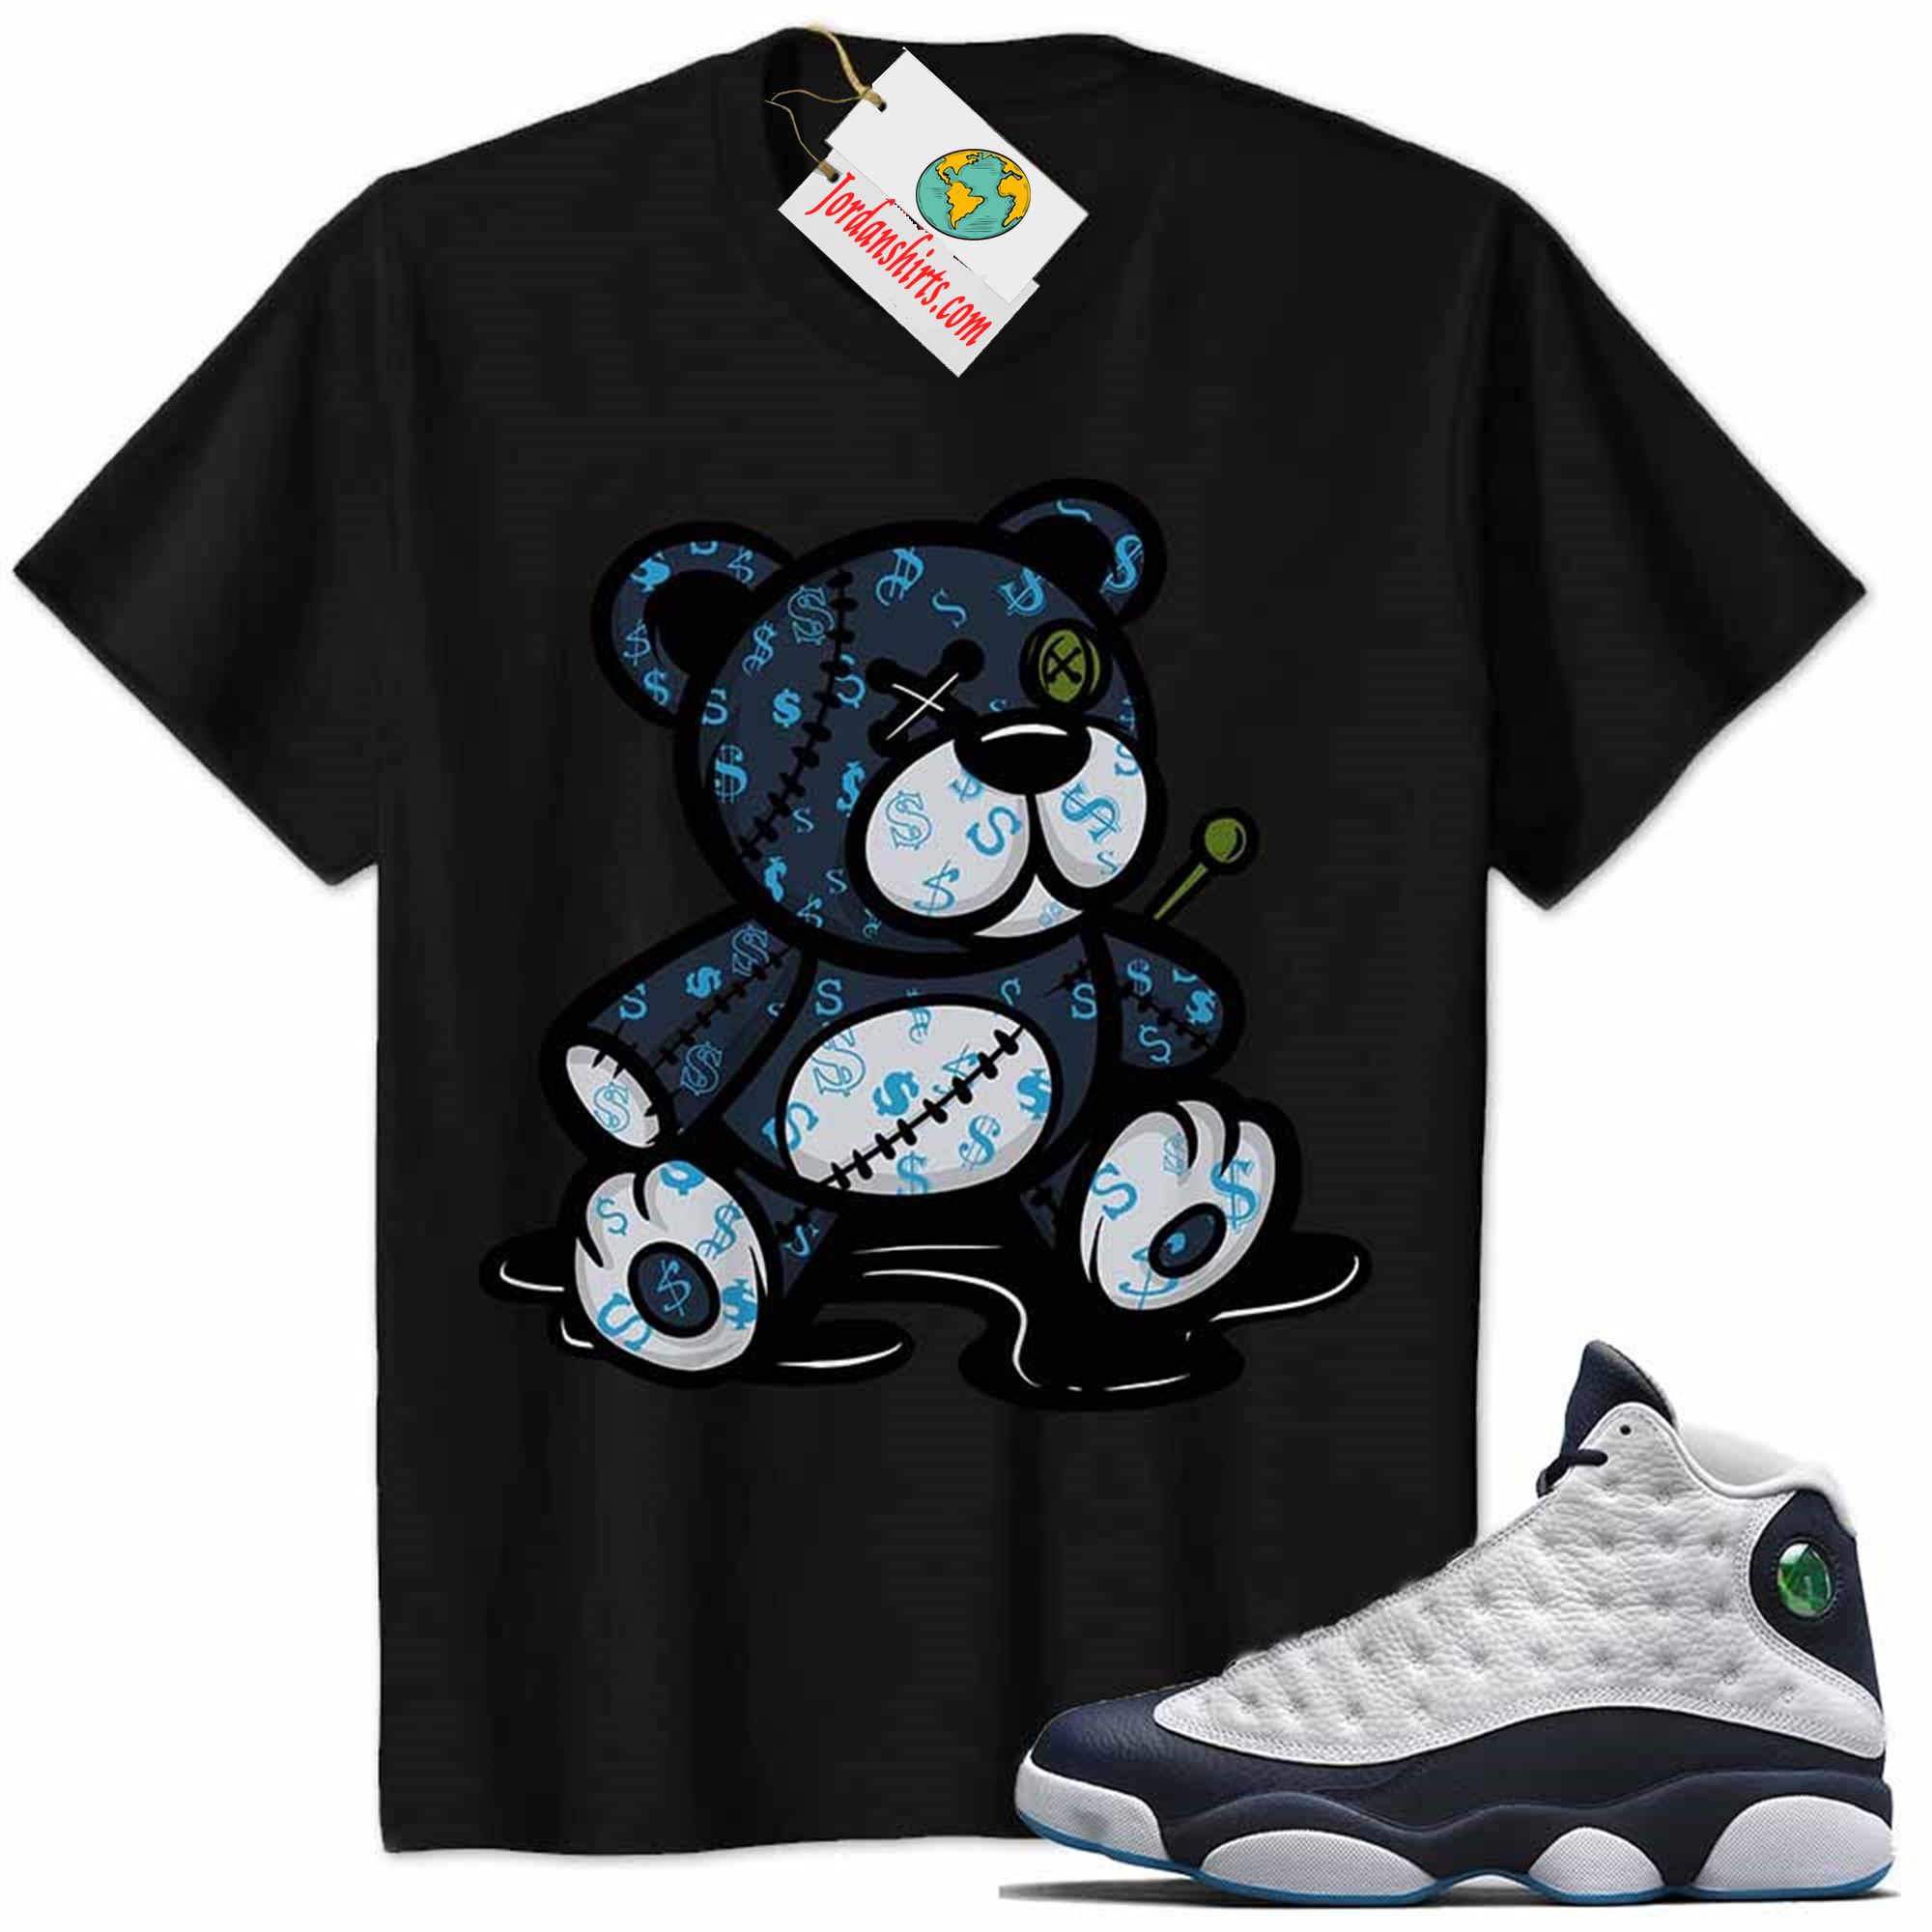 Jordan 13 Shirt, Jordan 13 Obsidian Shirt Teddy Bear All Money In Black Plus Size Up To 5xl